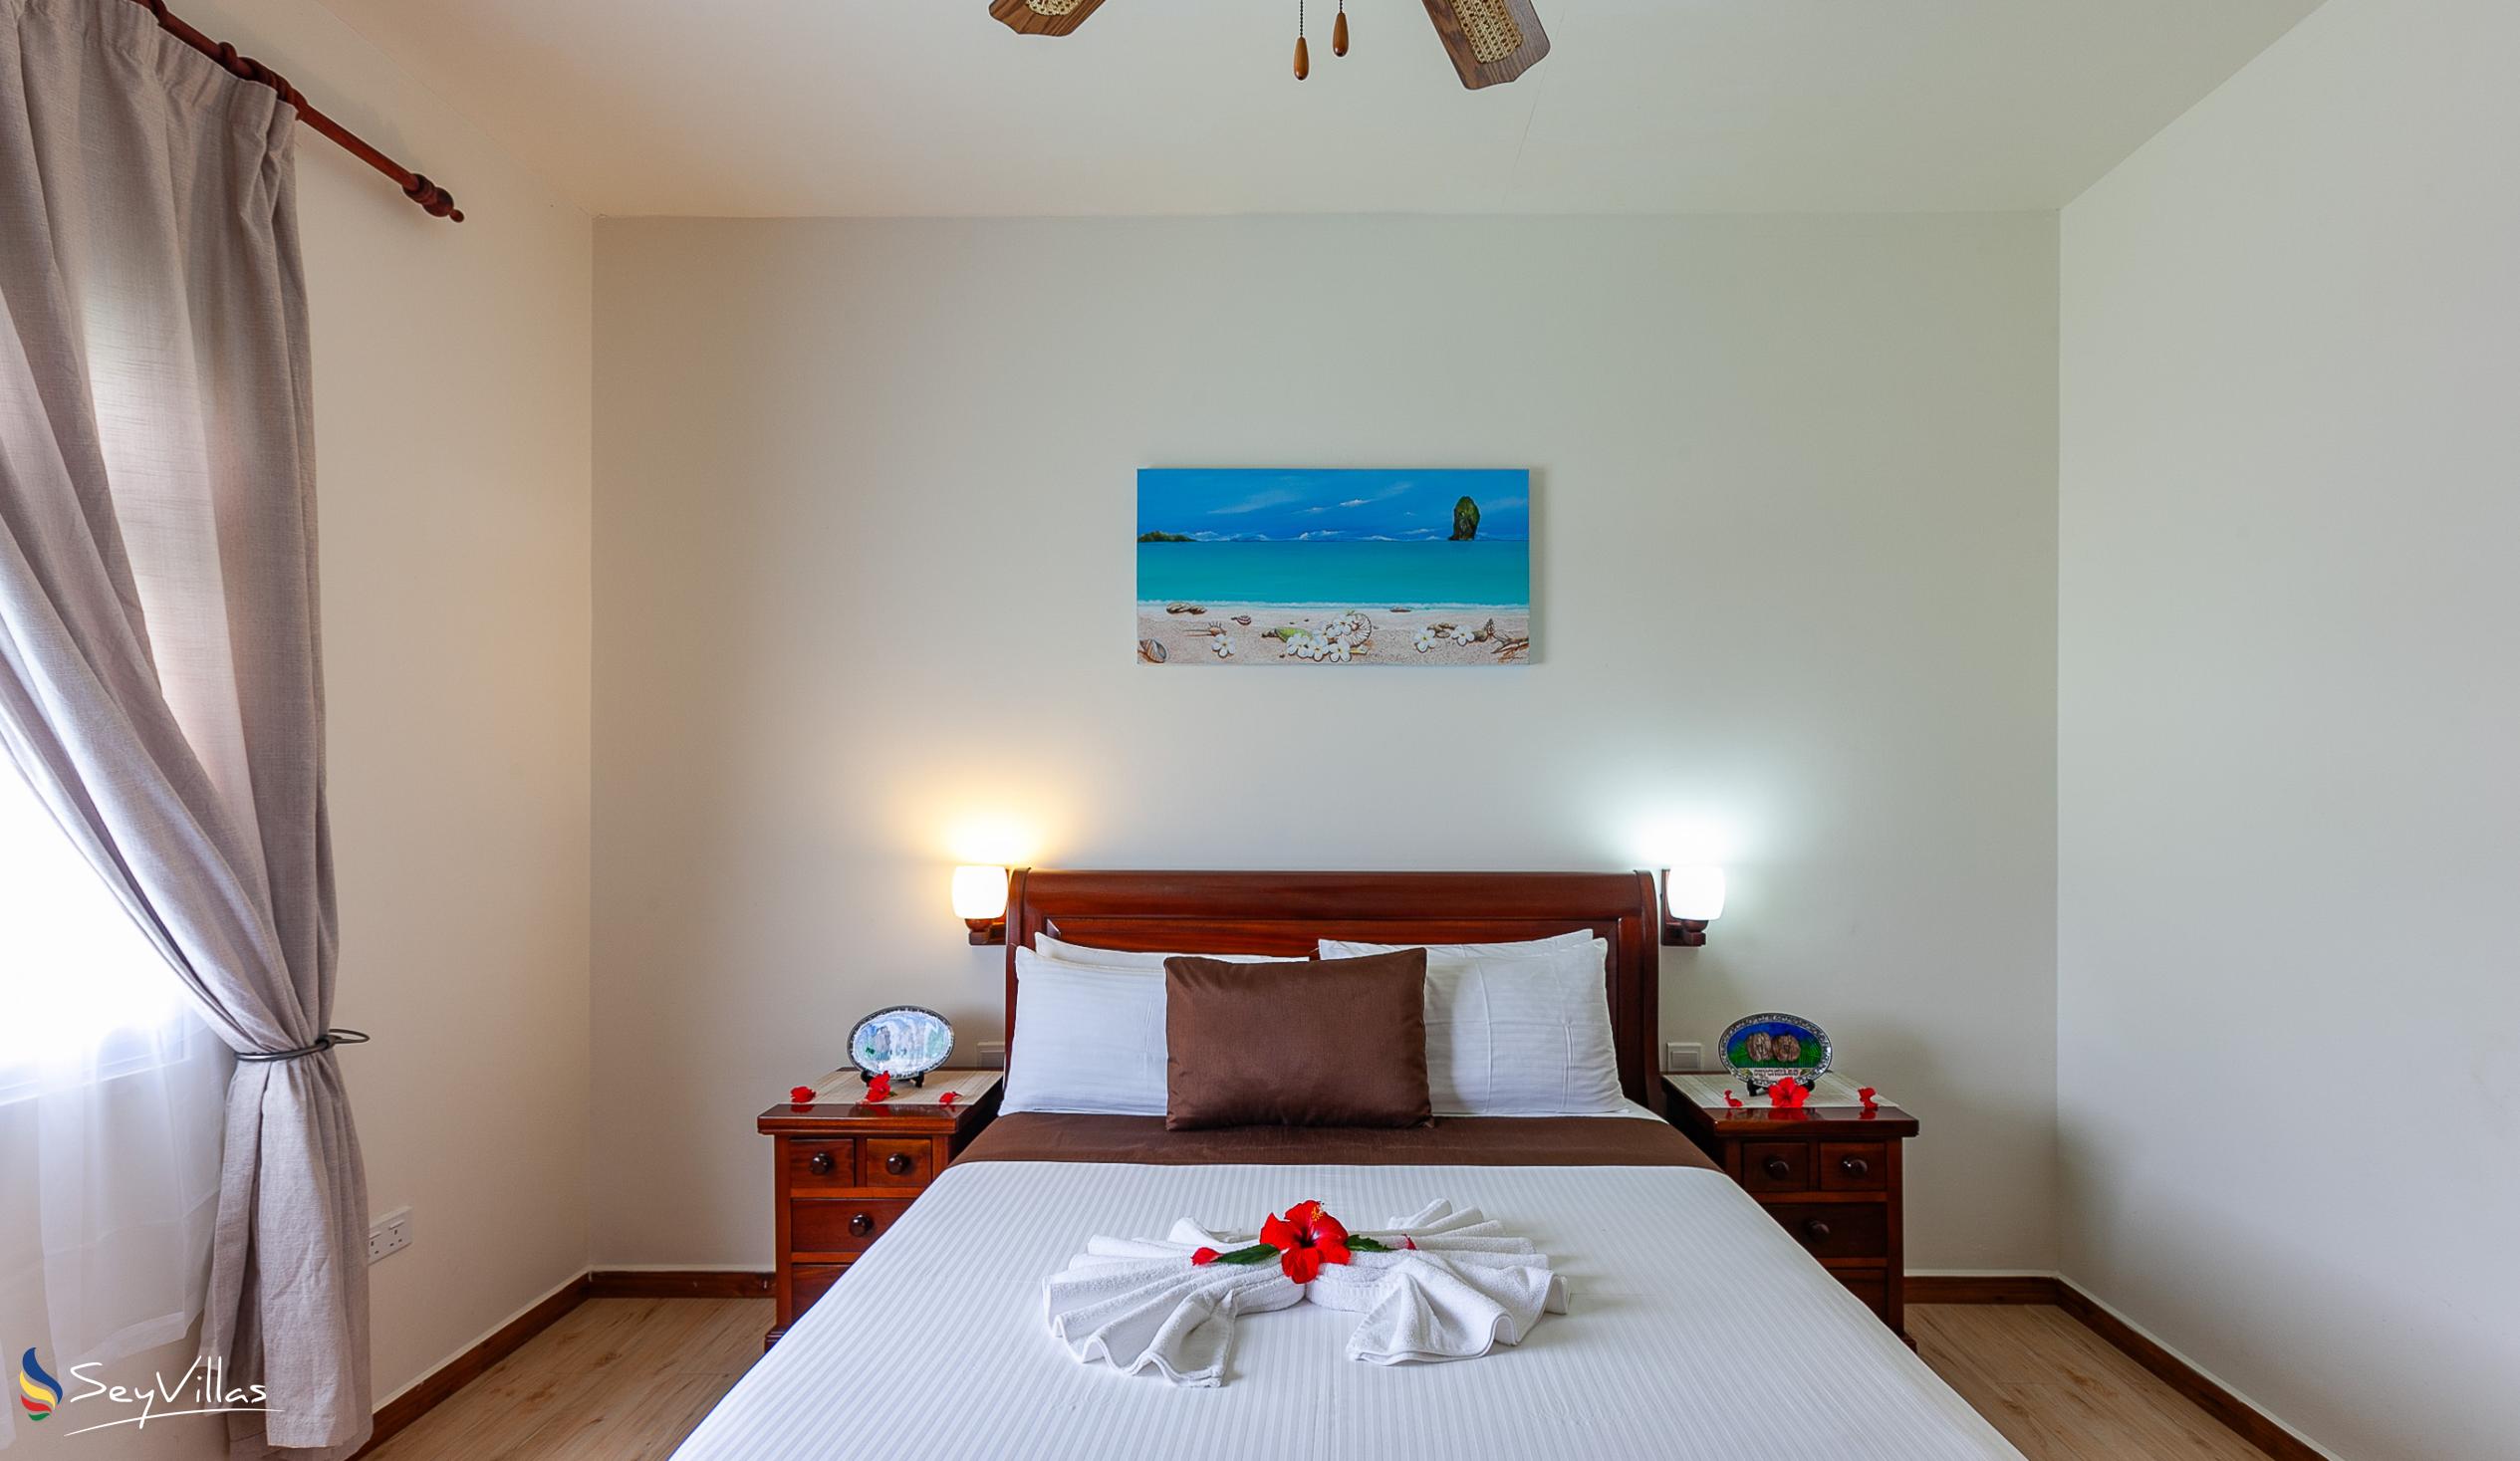 Foto 72: Seashell Beach Villa - Appartement 2 chambres - Praslin (Seychelles)